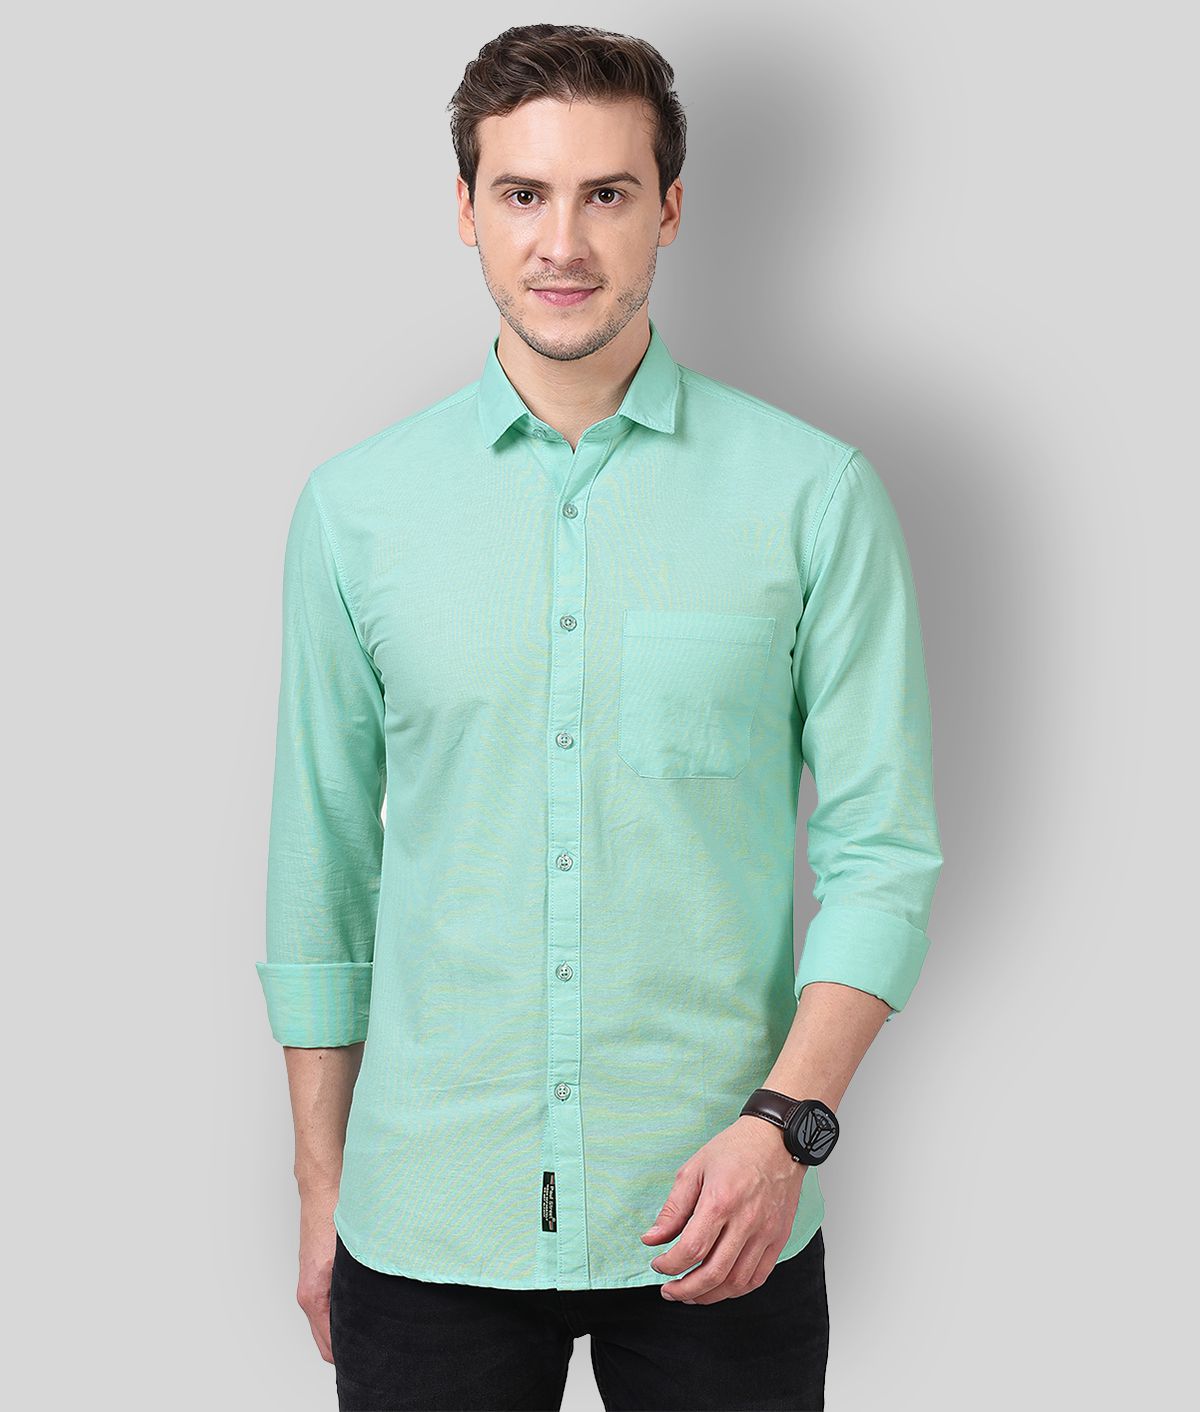 Paul Street - Green Linen Slim Fit Men's Casual Shirt ( Pack of 1 )